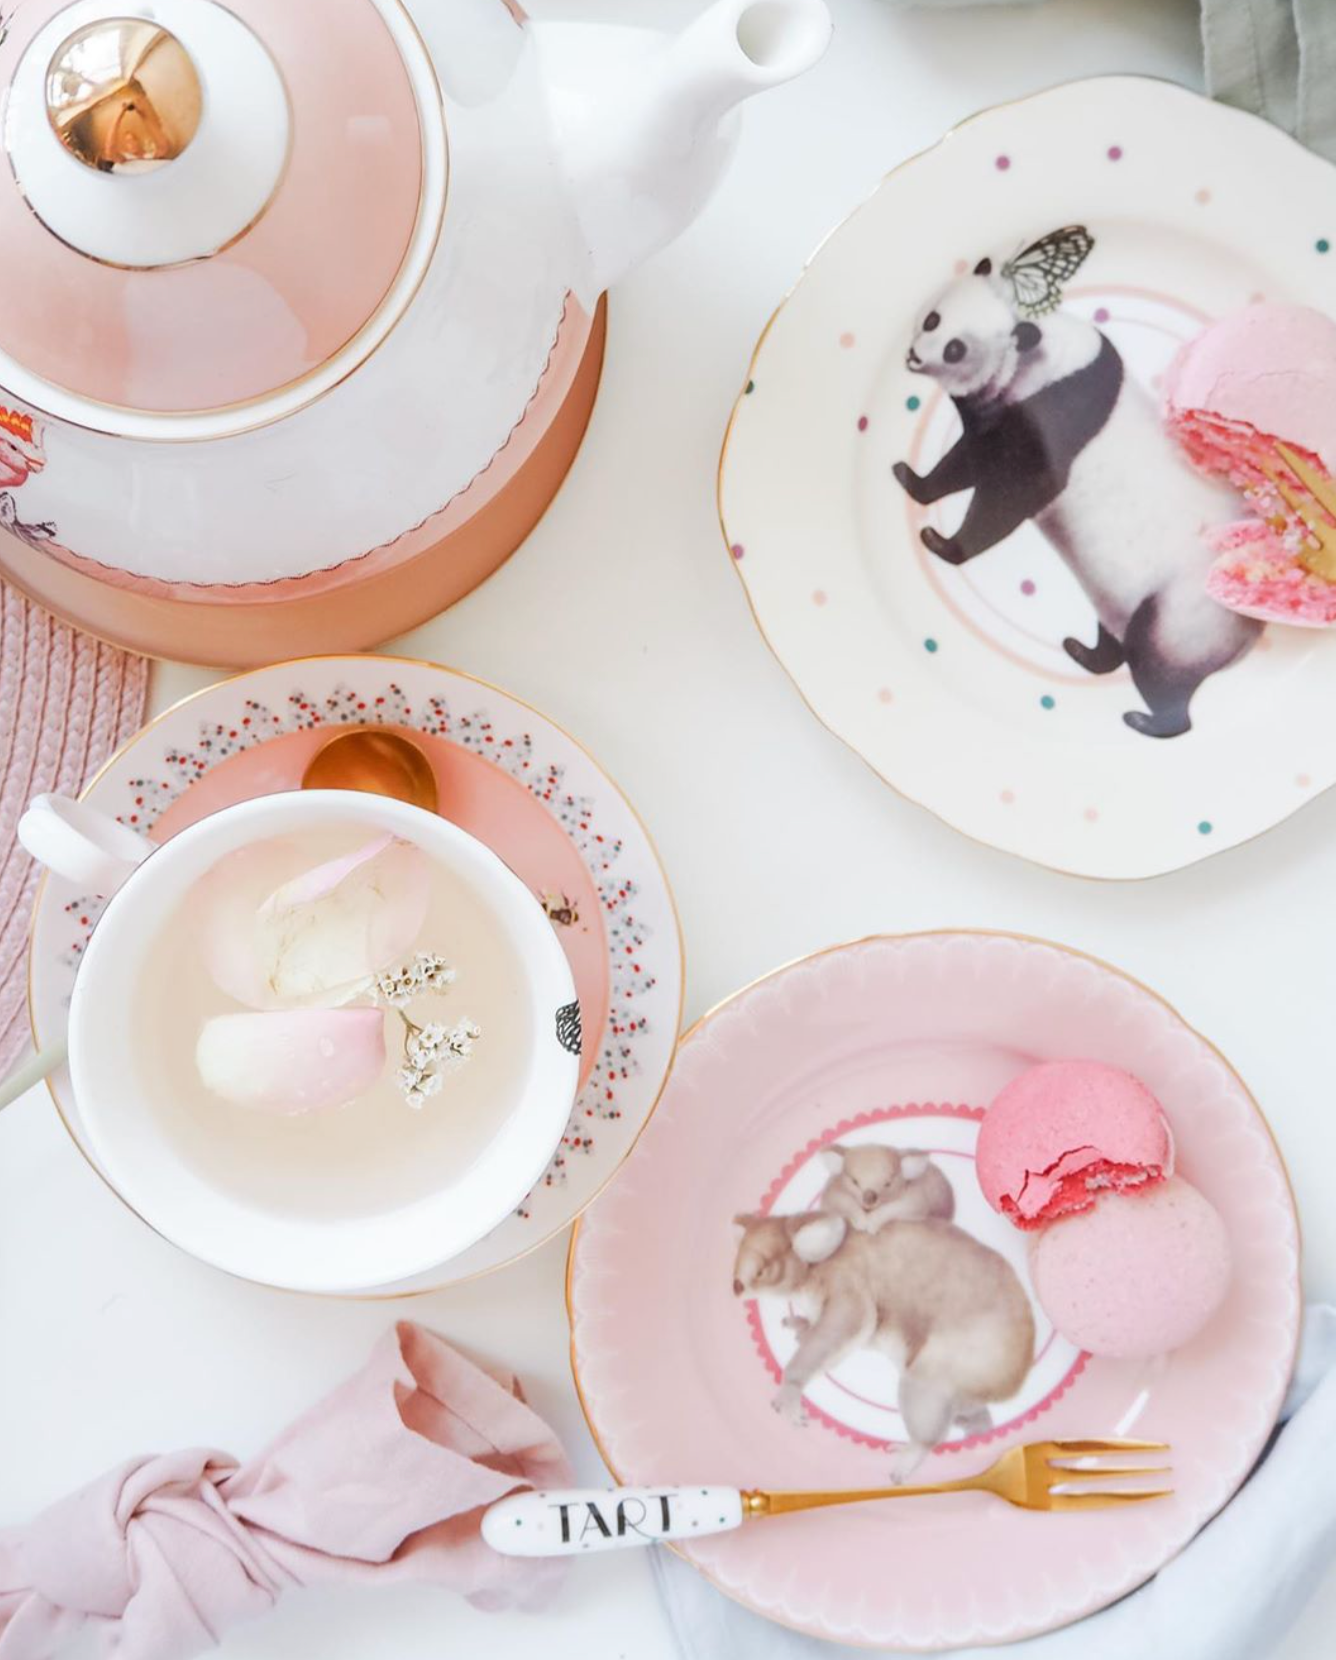 Yvonne Ellen Pastel Animal Tea Plates, Set Of 4